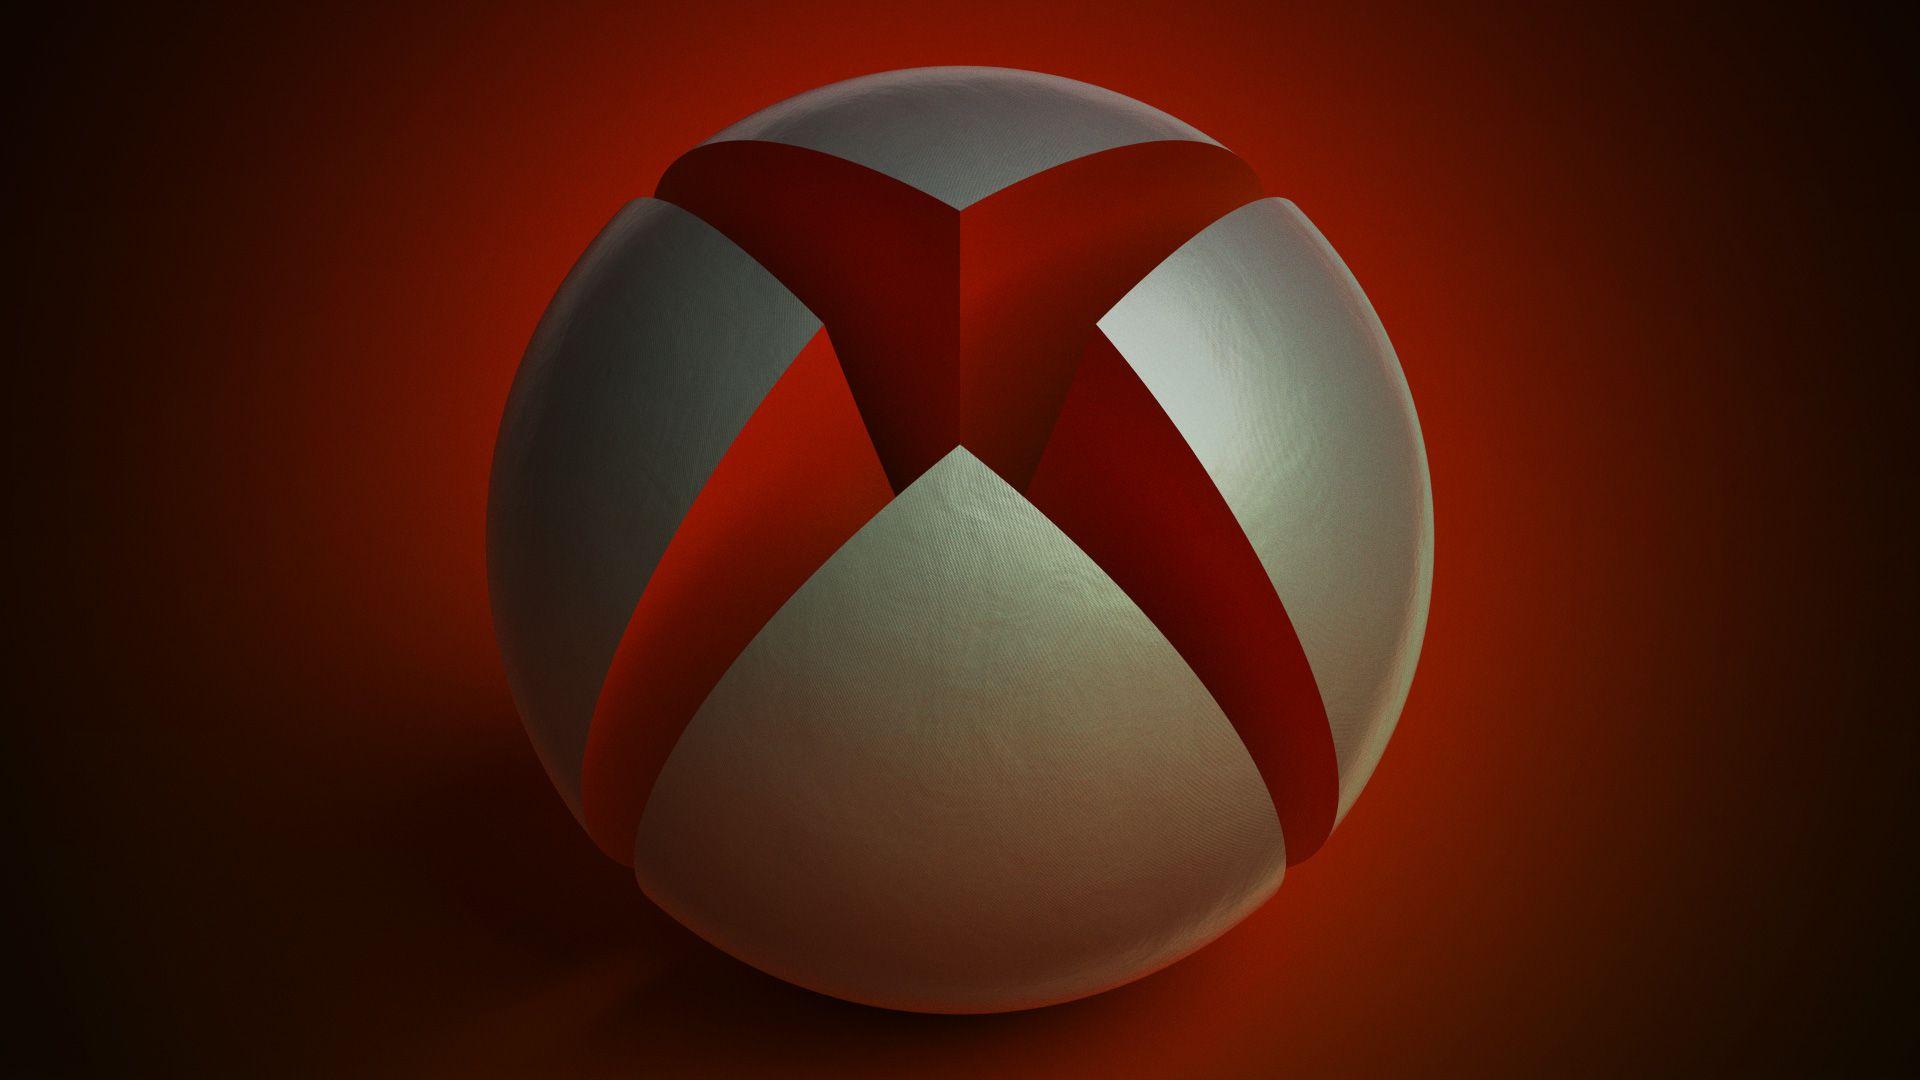 Red Xbox Logo - Xbox red Logos